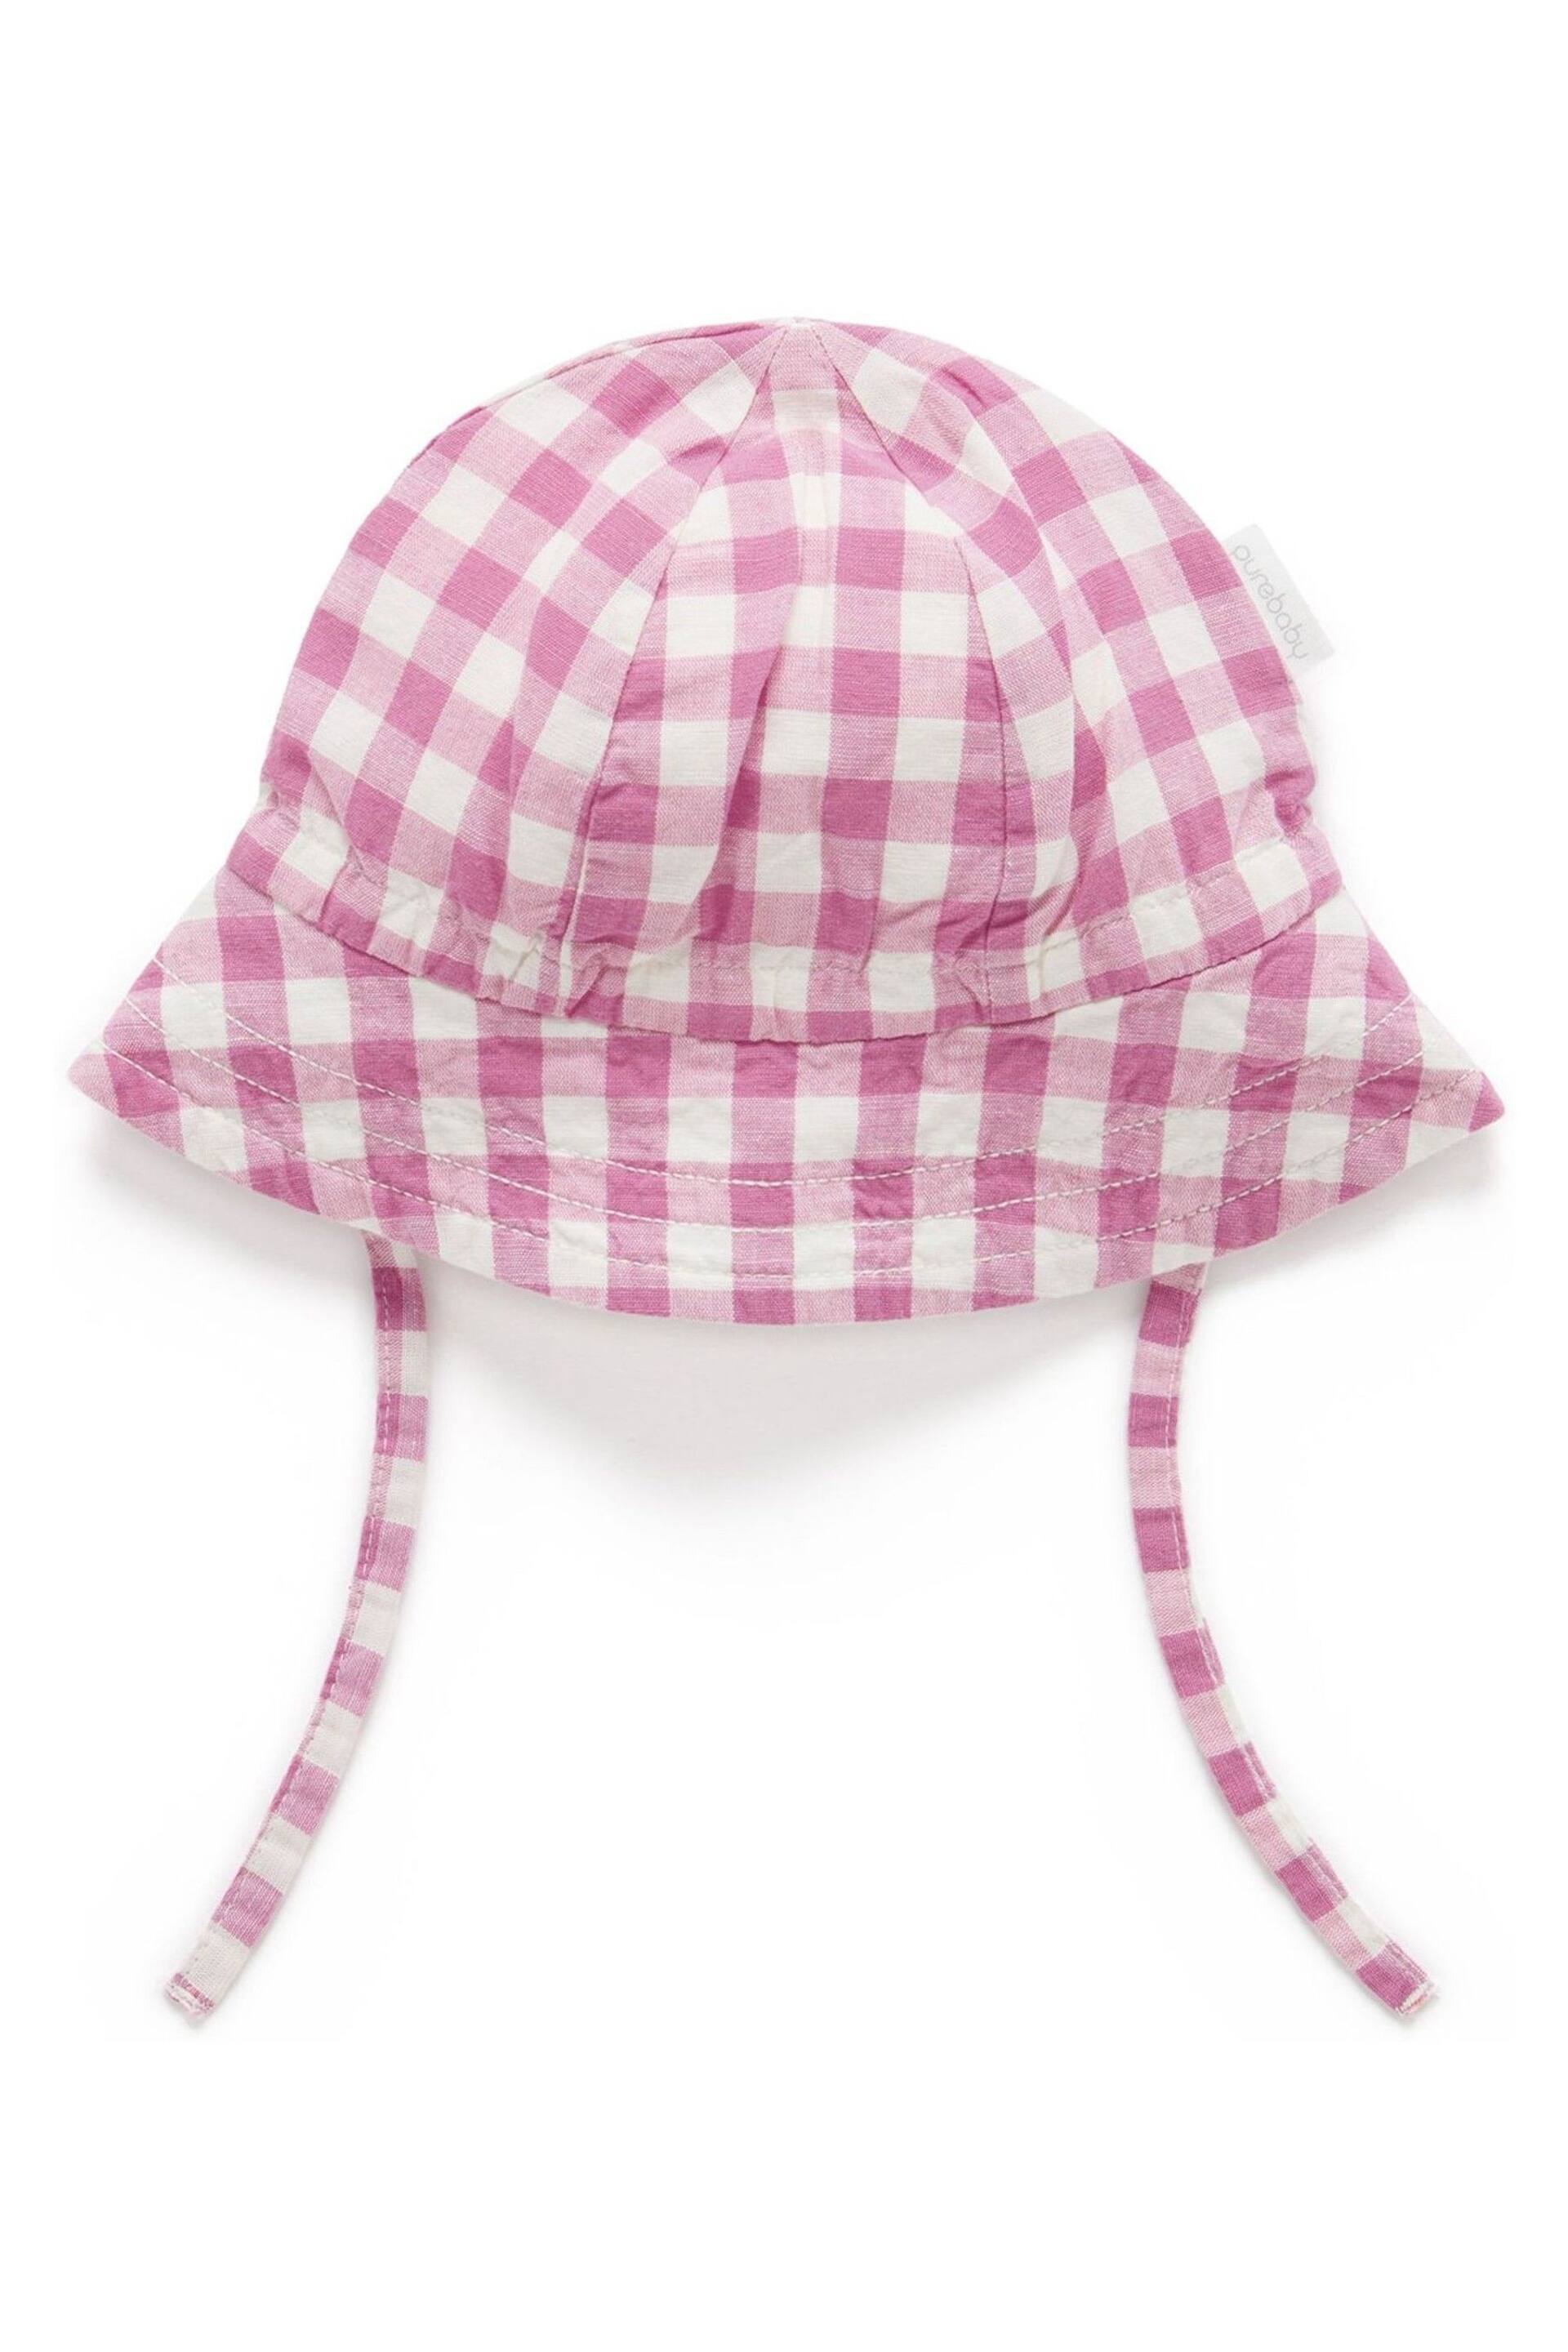 Purebaby Gingham Hat - Image 1 of 4